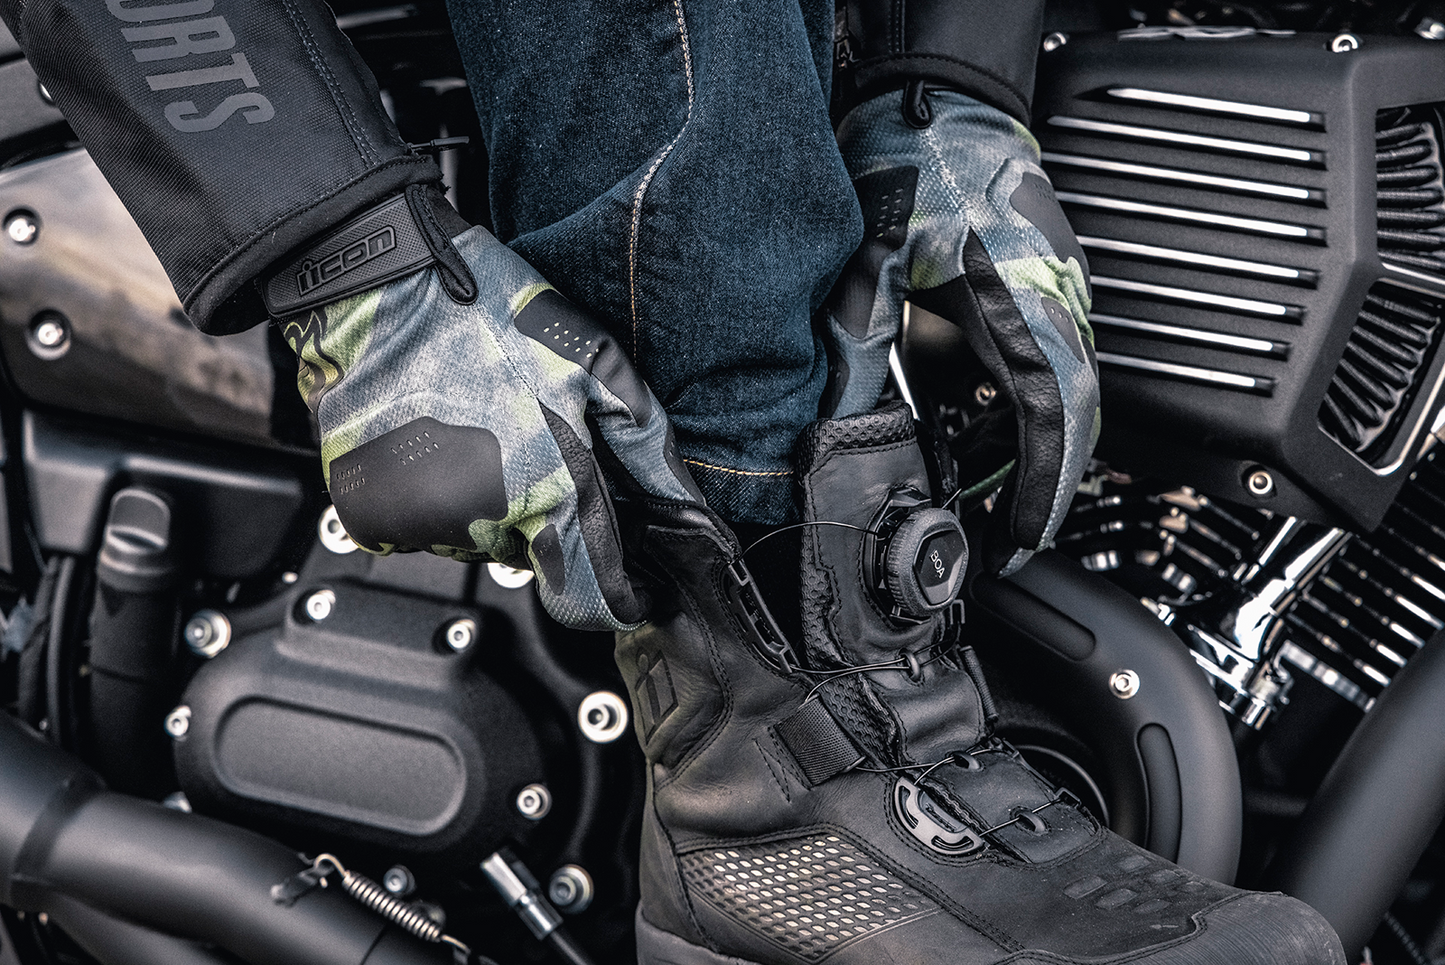 ICON Stormhawk Boots - Black - Size 8 3403-1150